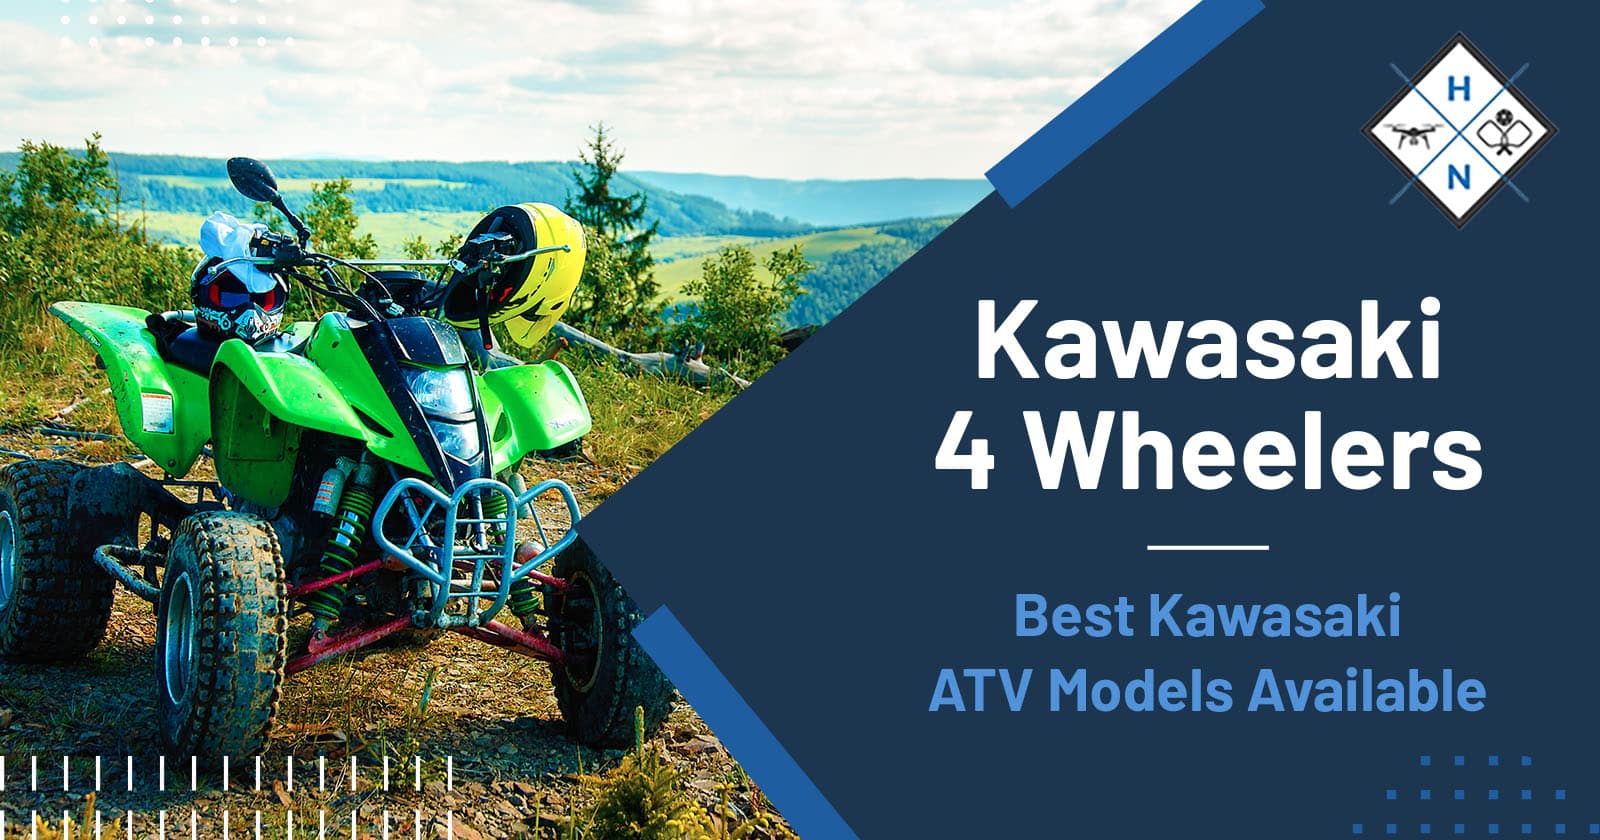 Kawasaki 4 Wheelers – Best Kawasaki ATV Models Available